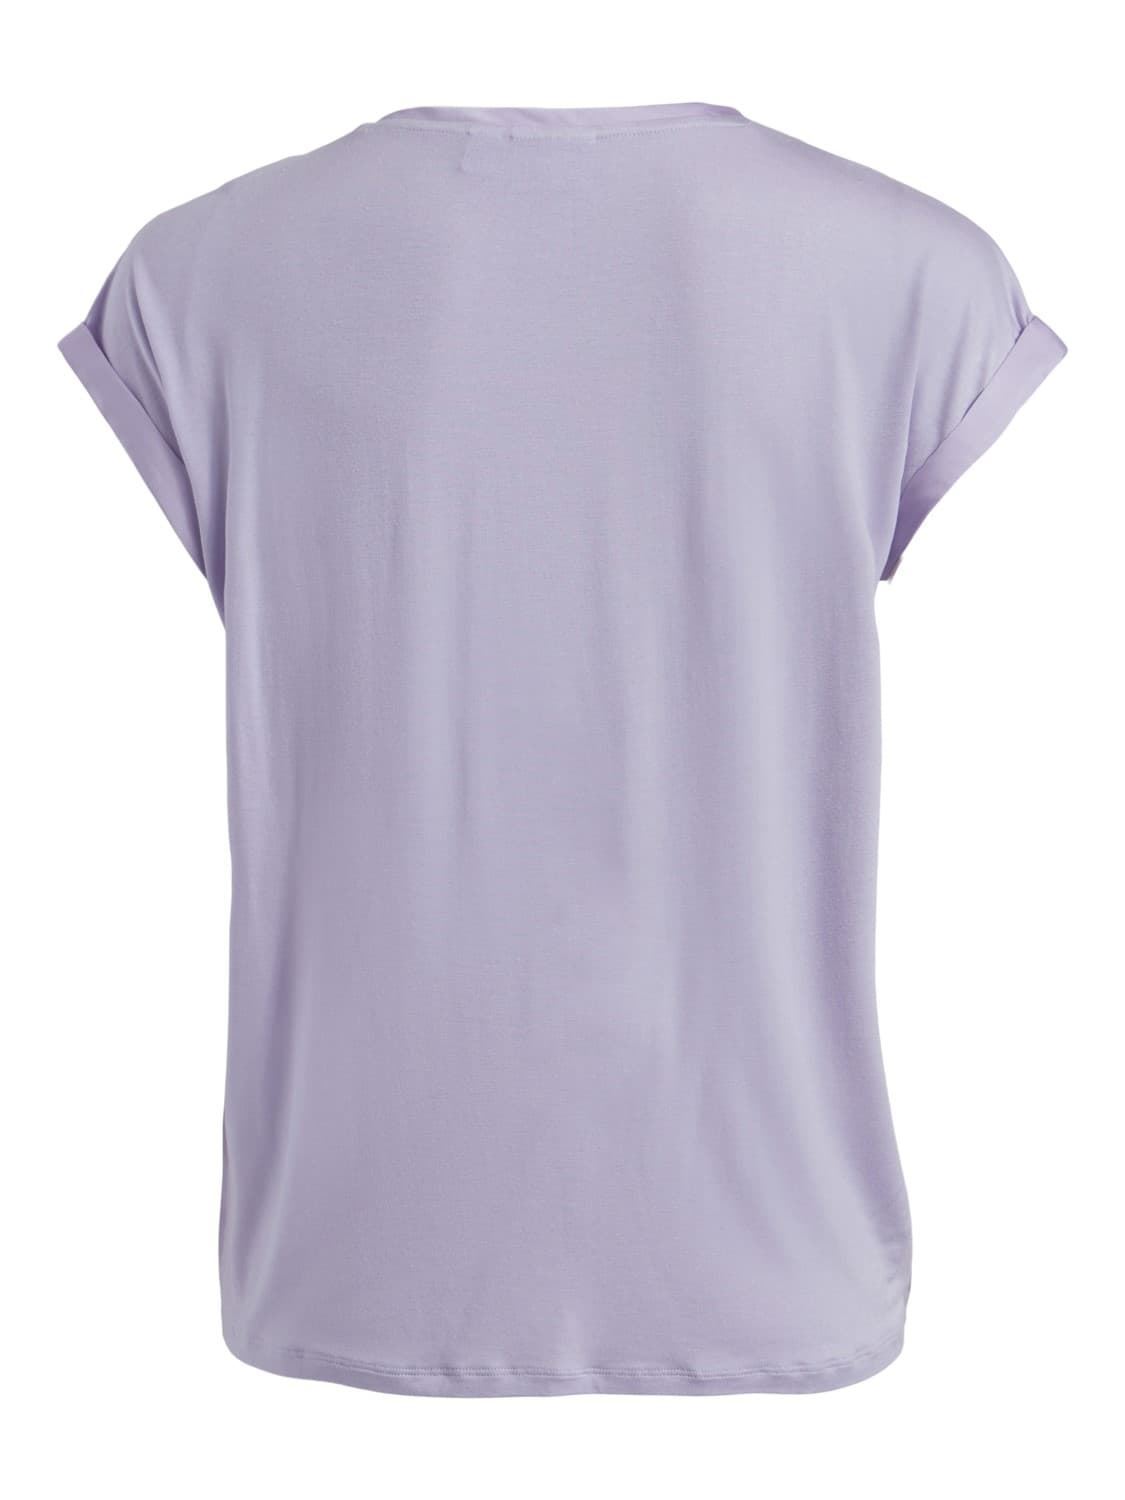 Camiseta manga corta Viellette lila - Imagen 4